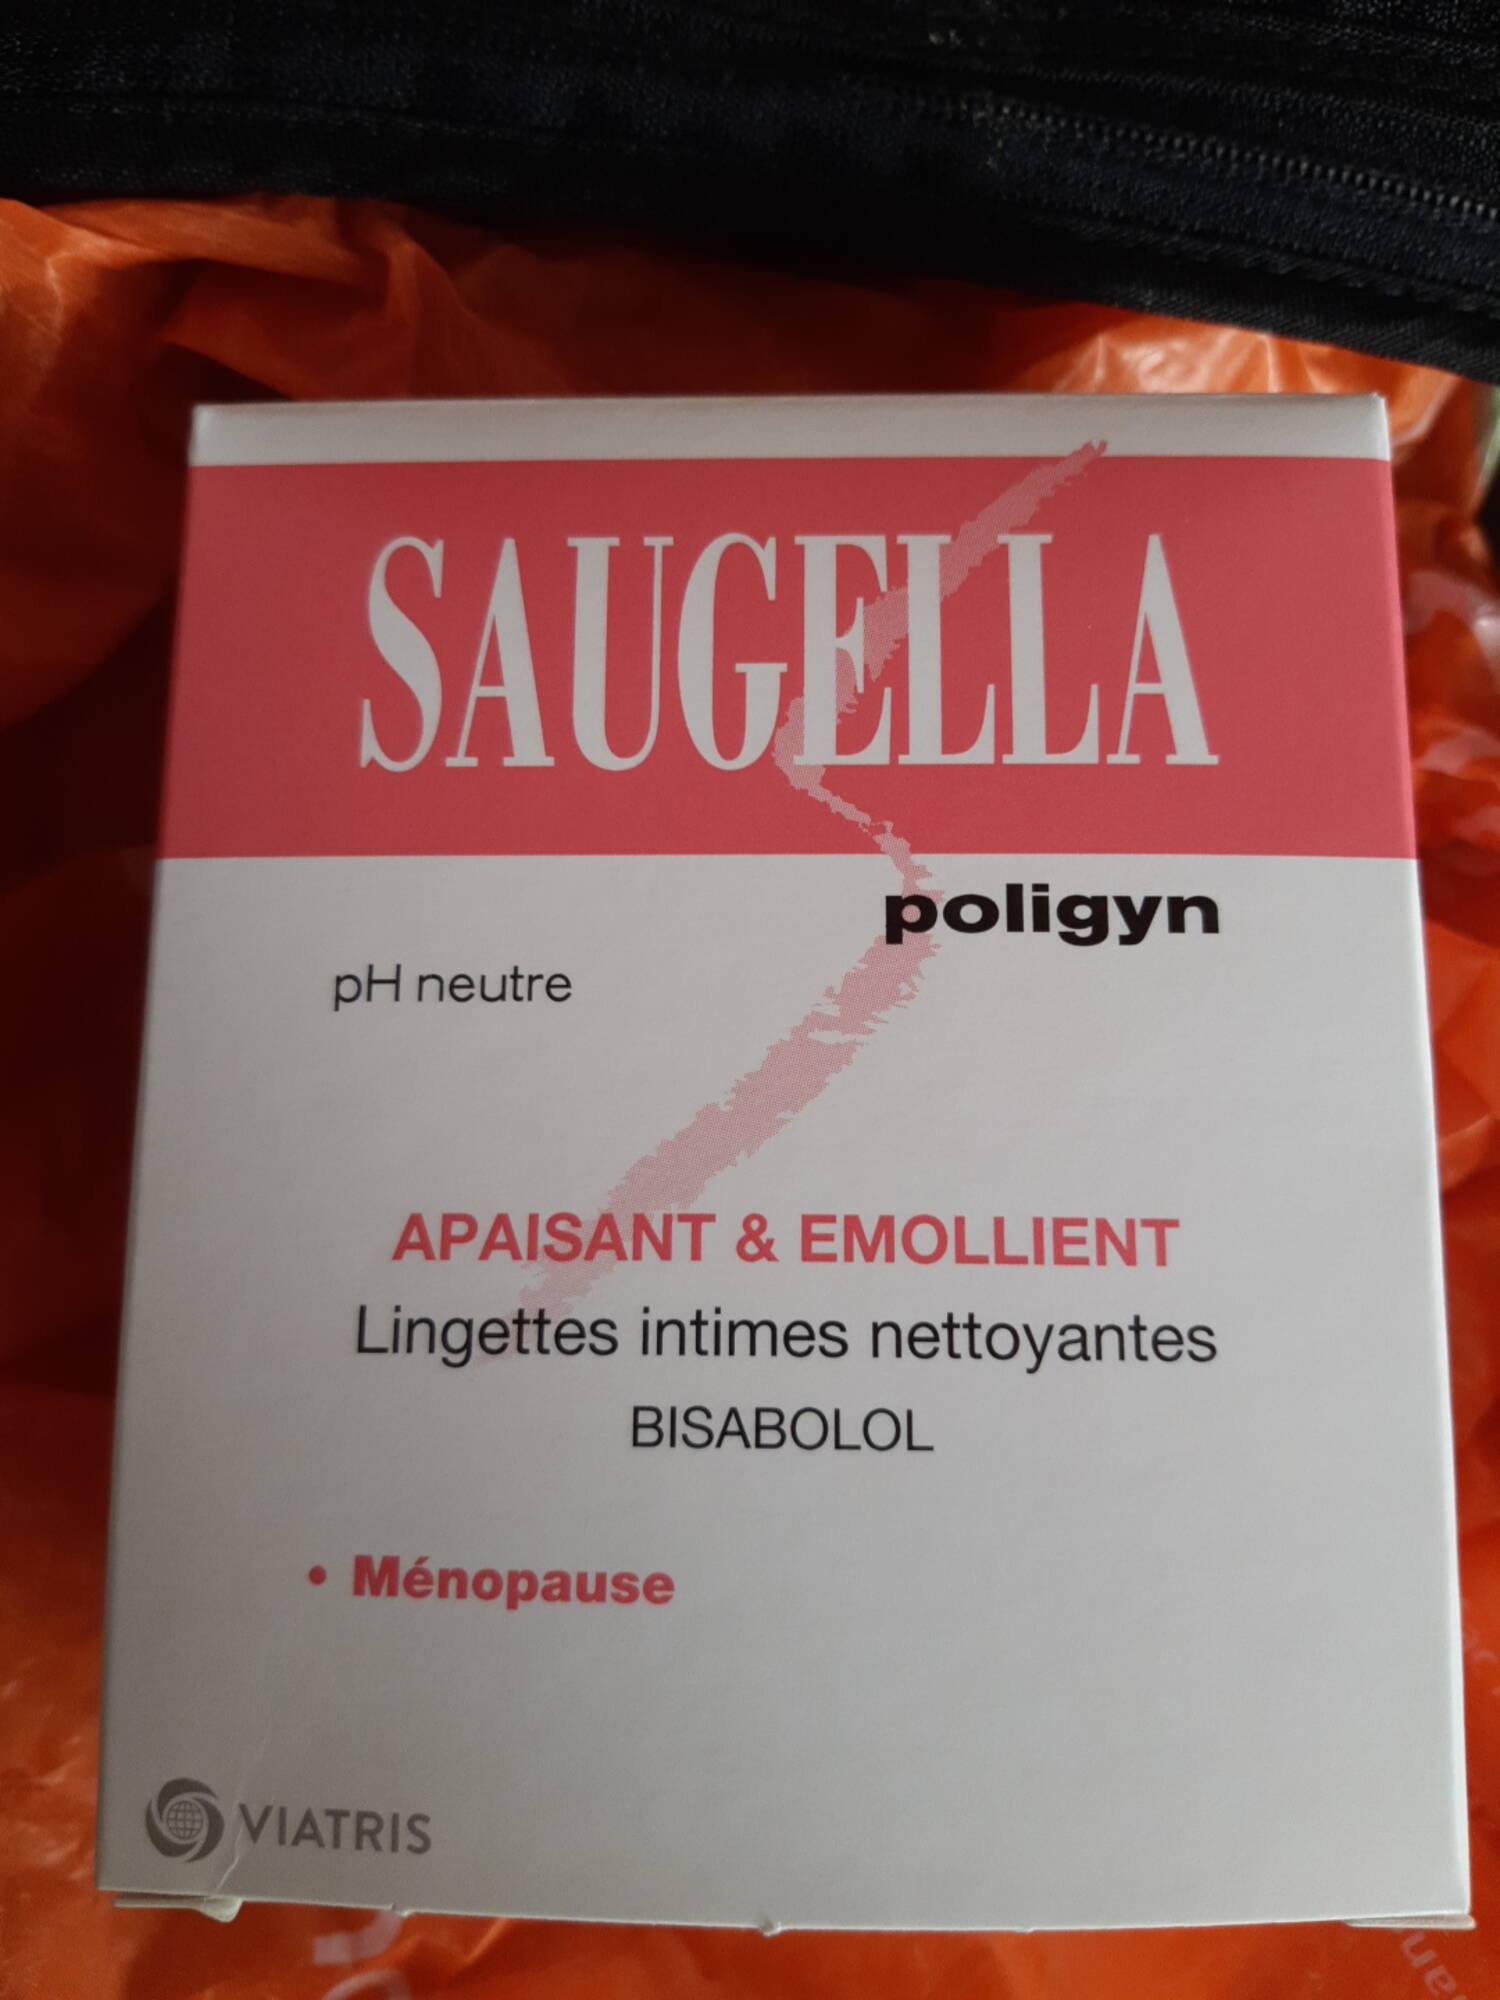 SAUGELLA - Apaisant & emolliant - 10 Lingettes intimes nettoyantes ménopause